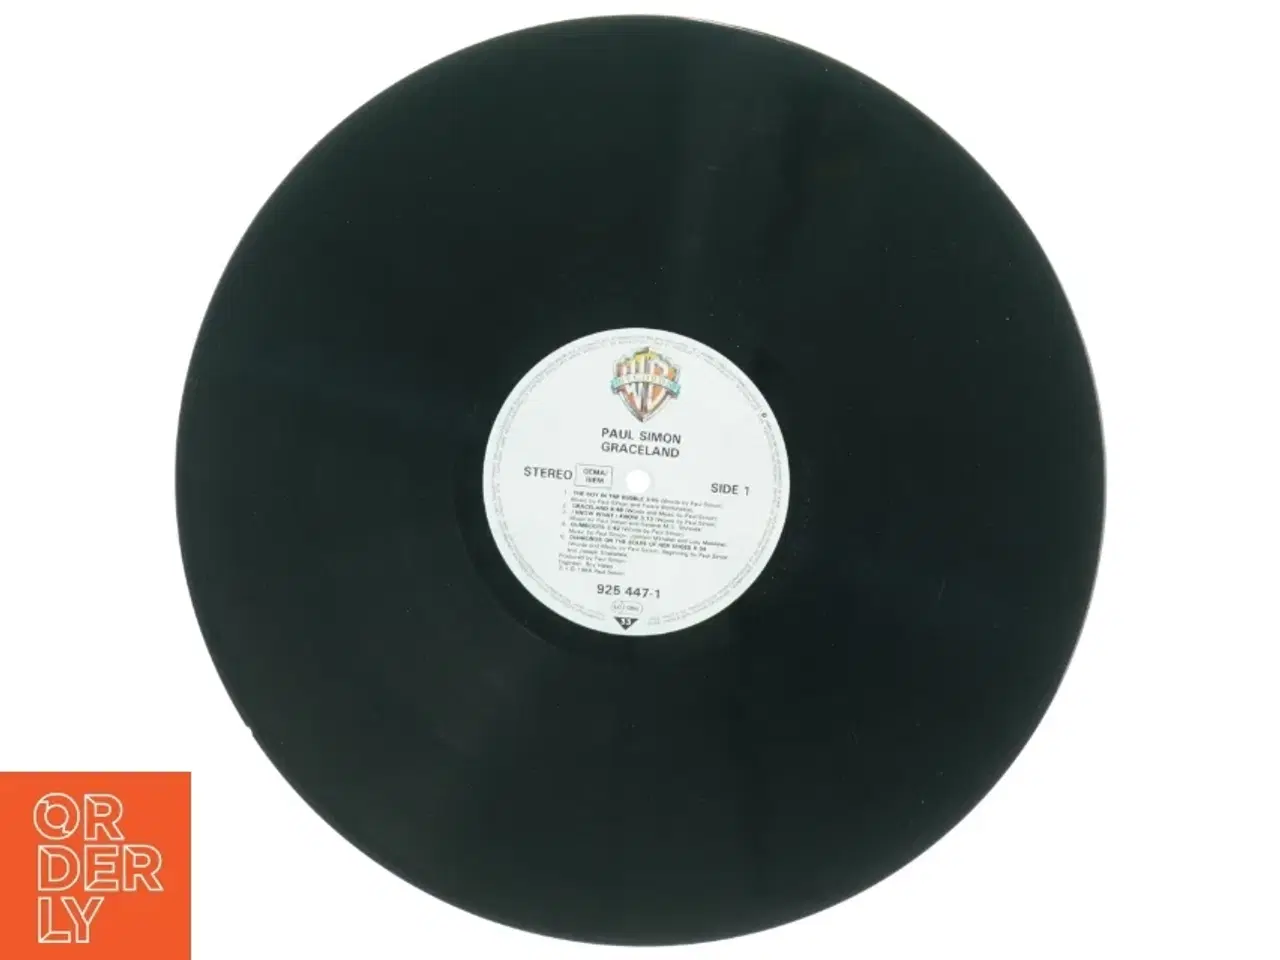 Billede 2 - Paul Simon Graceland LP fra Warner Bros. Records (str. 31 x 31 cm)